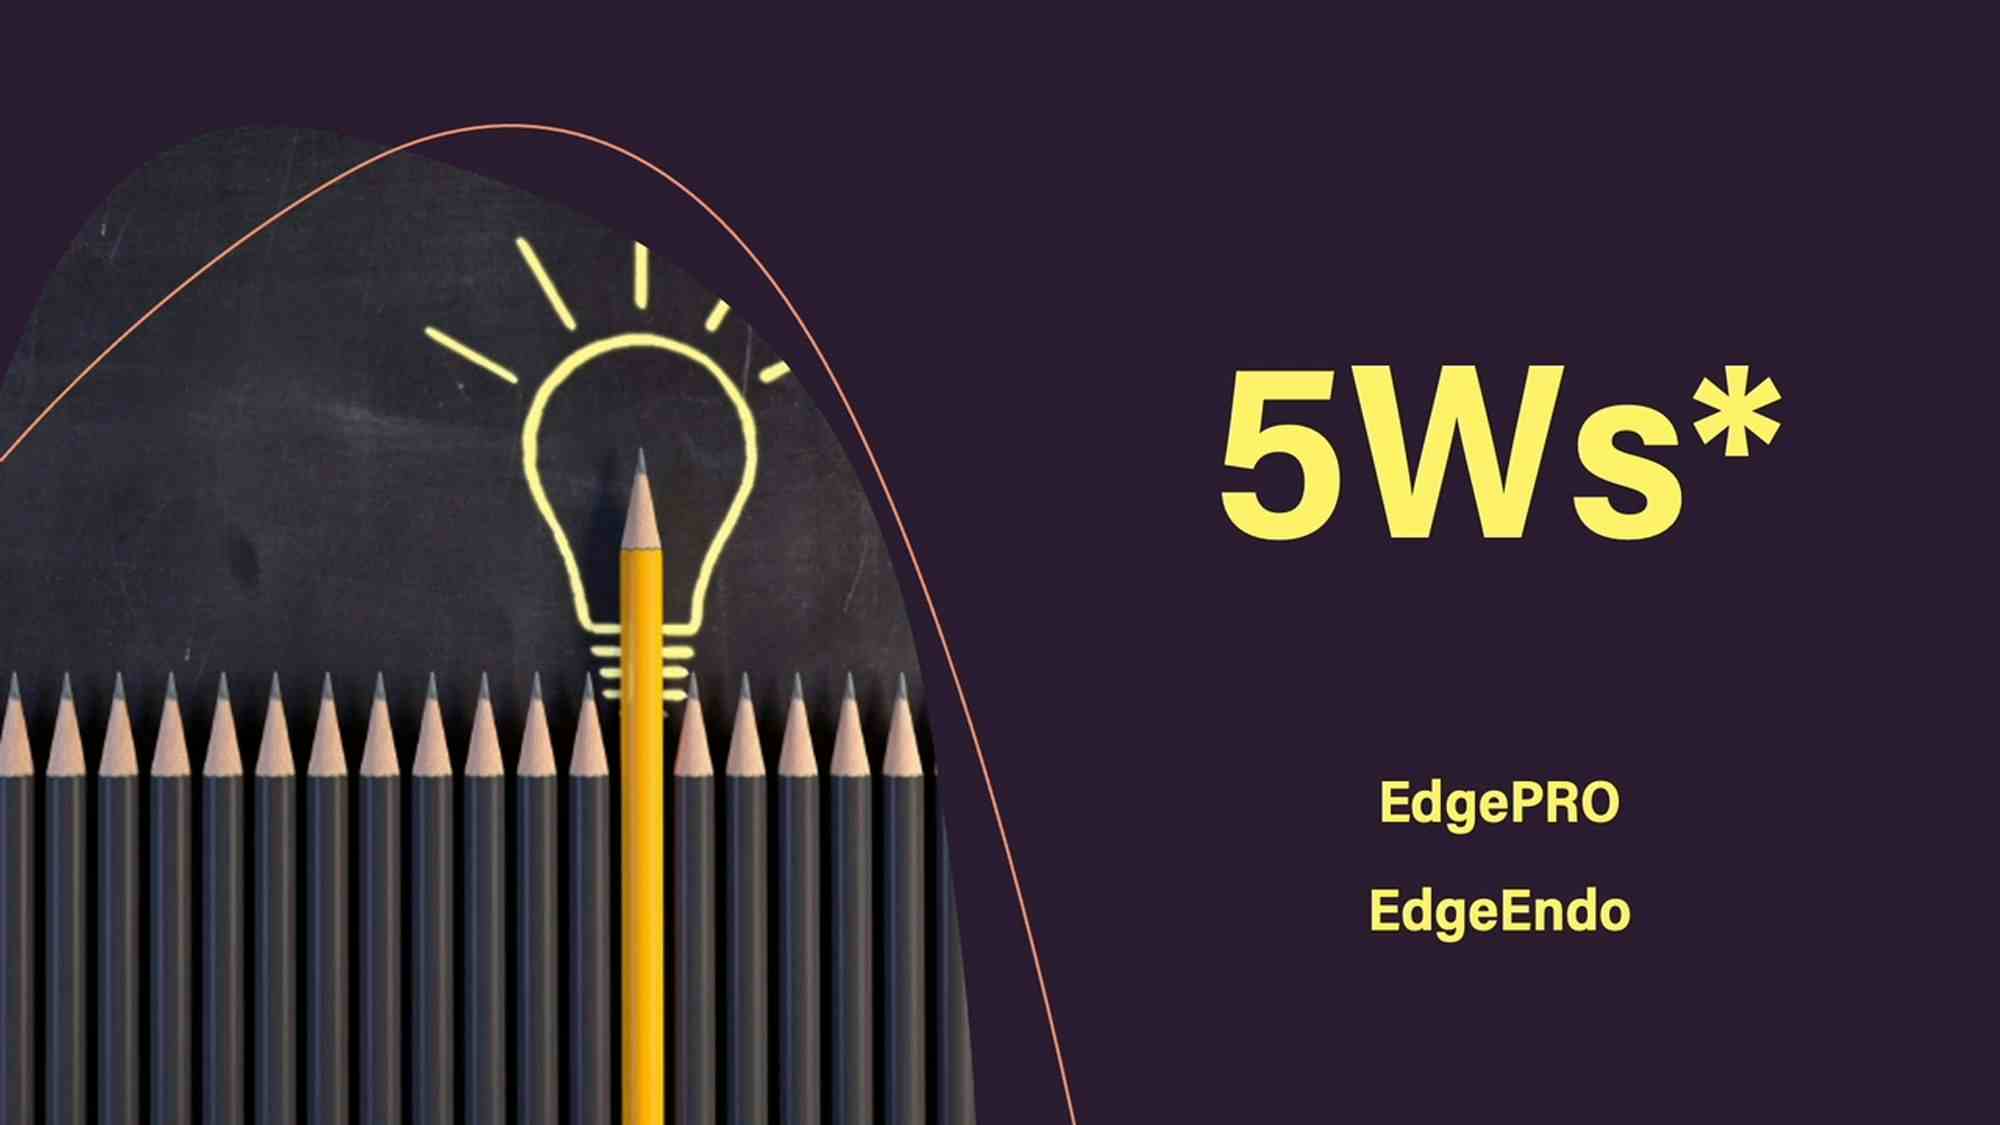 5Ws Video - EdgePRO